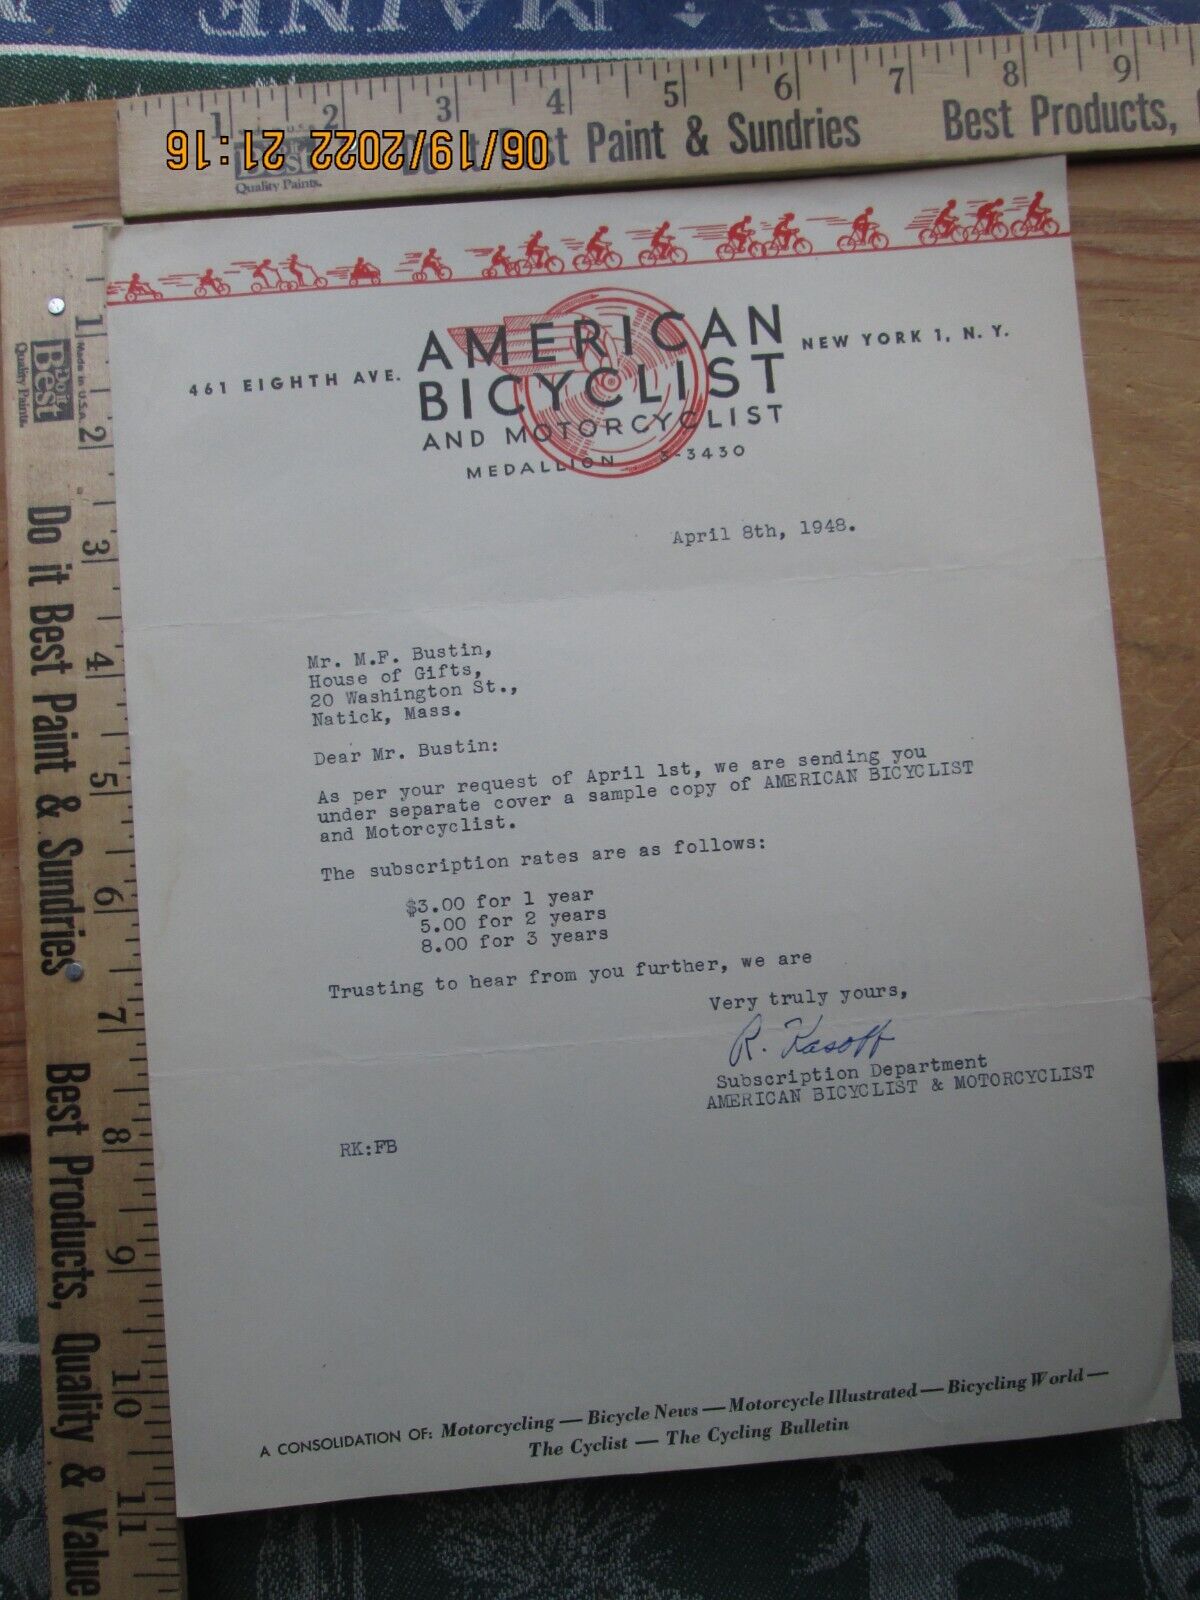 american bicyclist & motorcyclist letterhead 1948